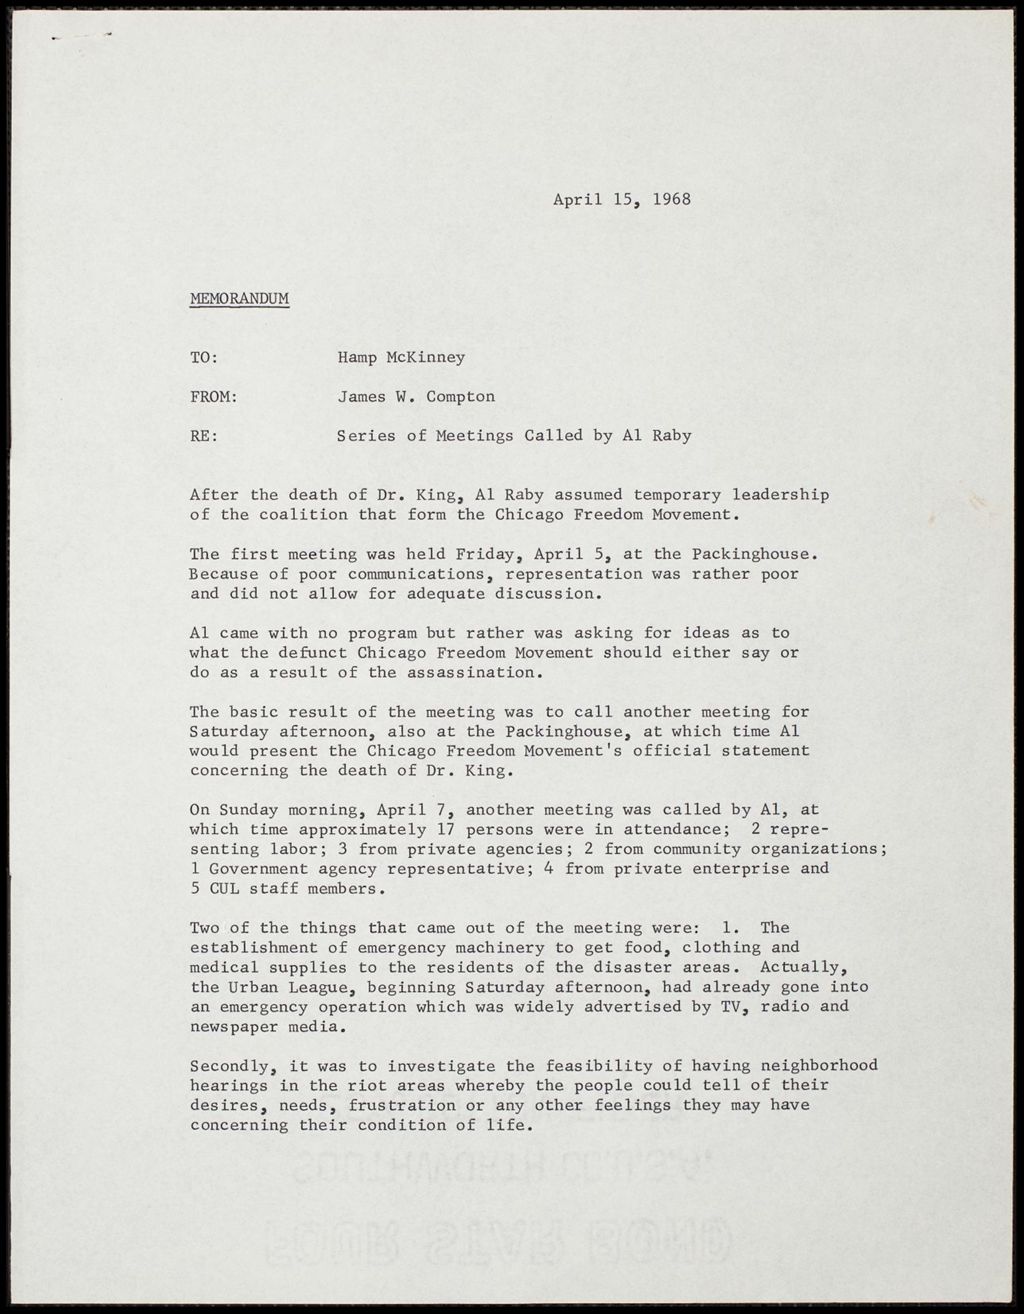 Miniature of Chicago Riots - memorandum, 1968 (Folder I-2964)